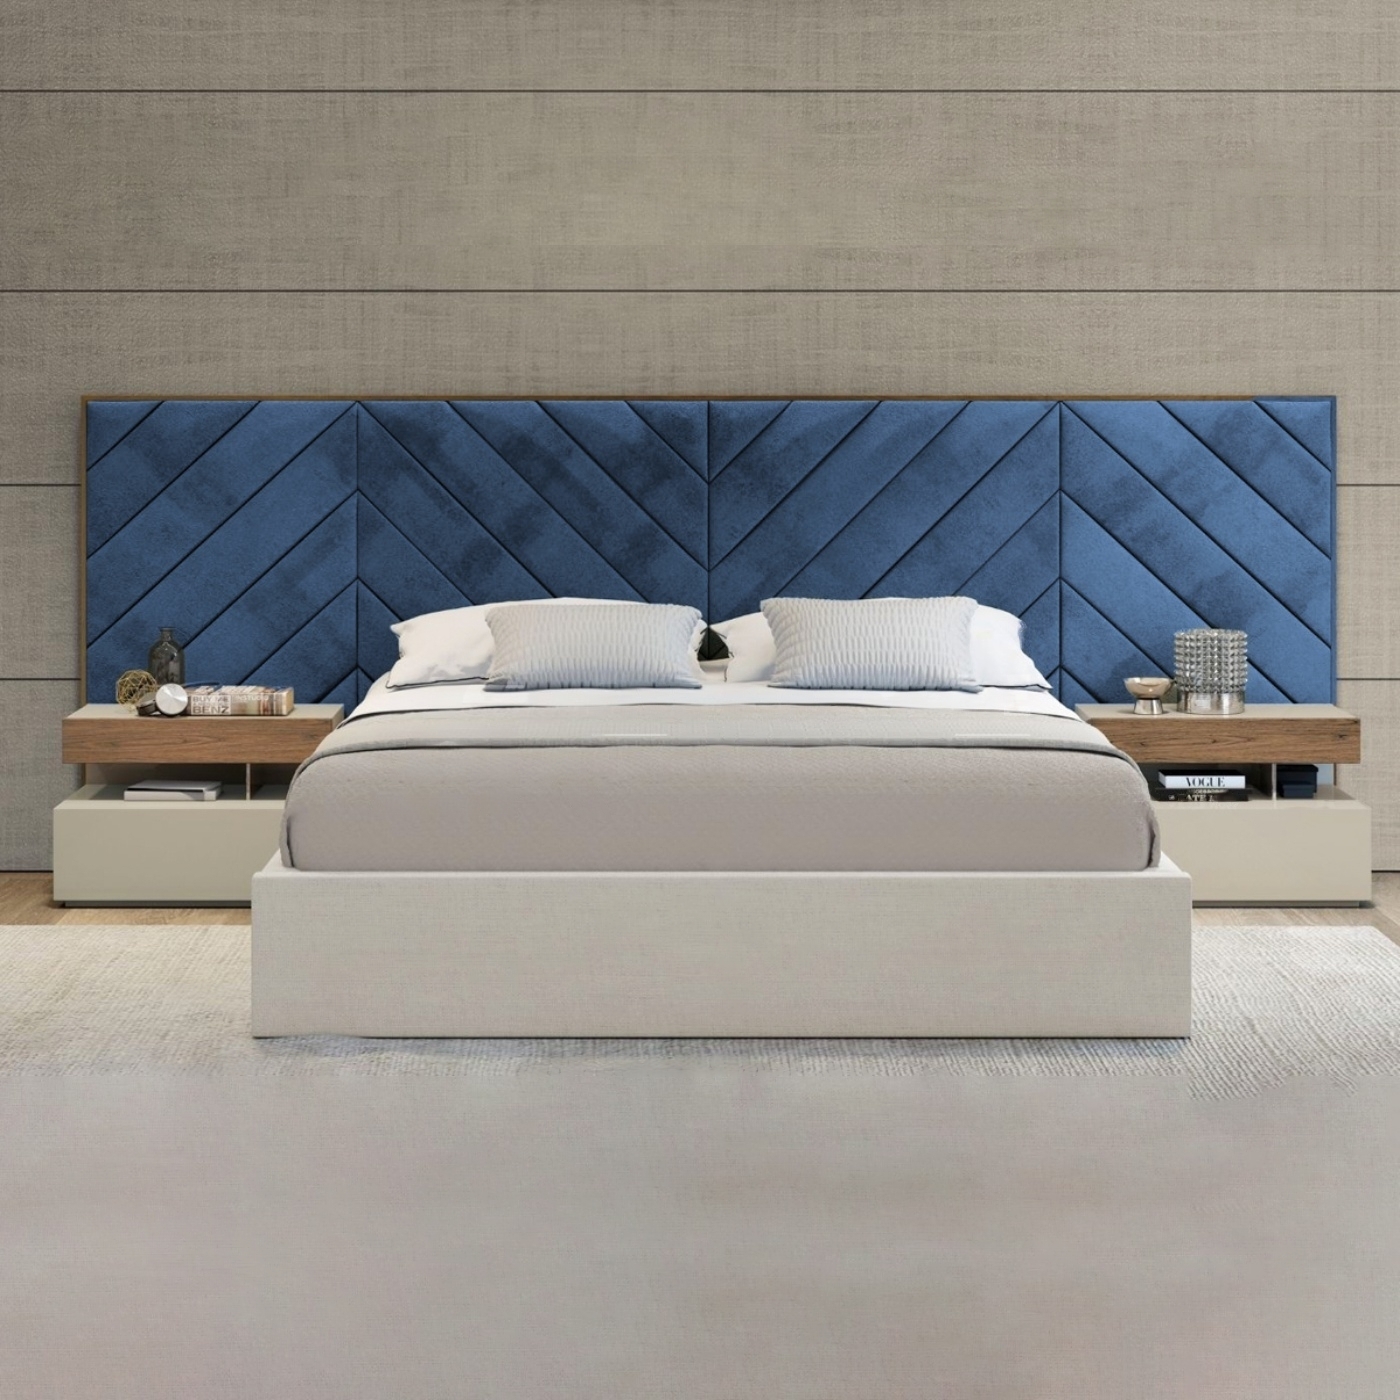 Wallpanel Headboard Bed